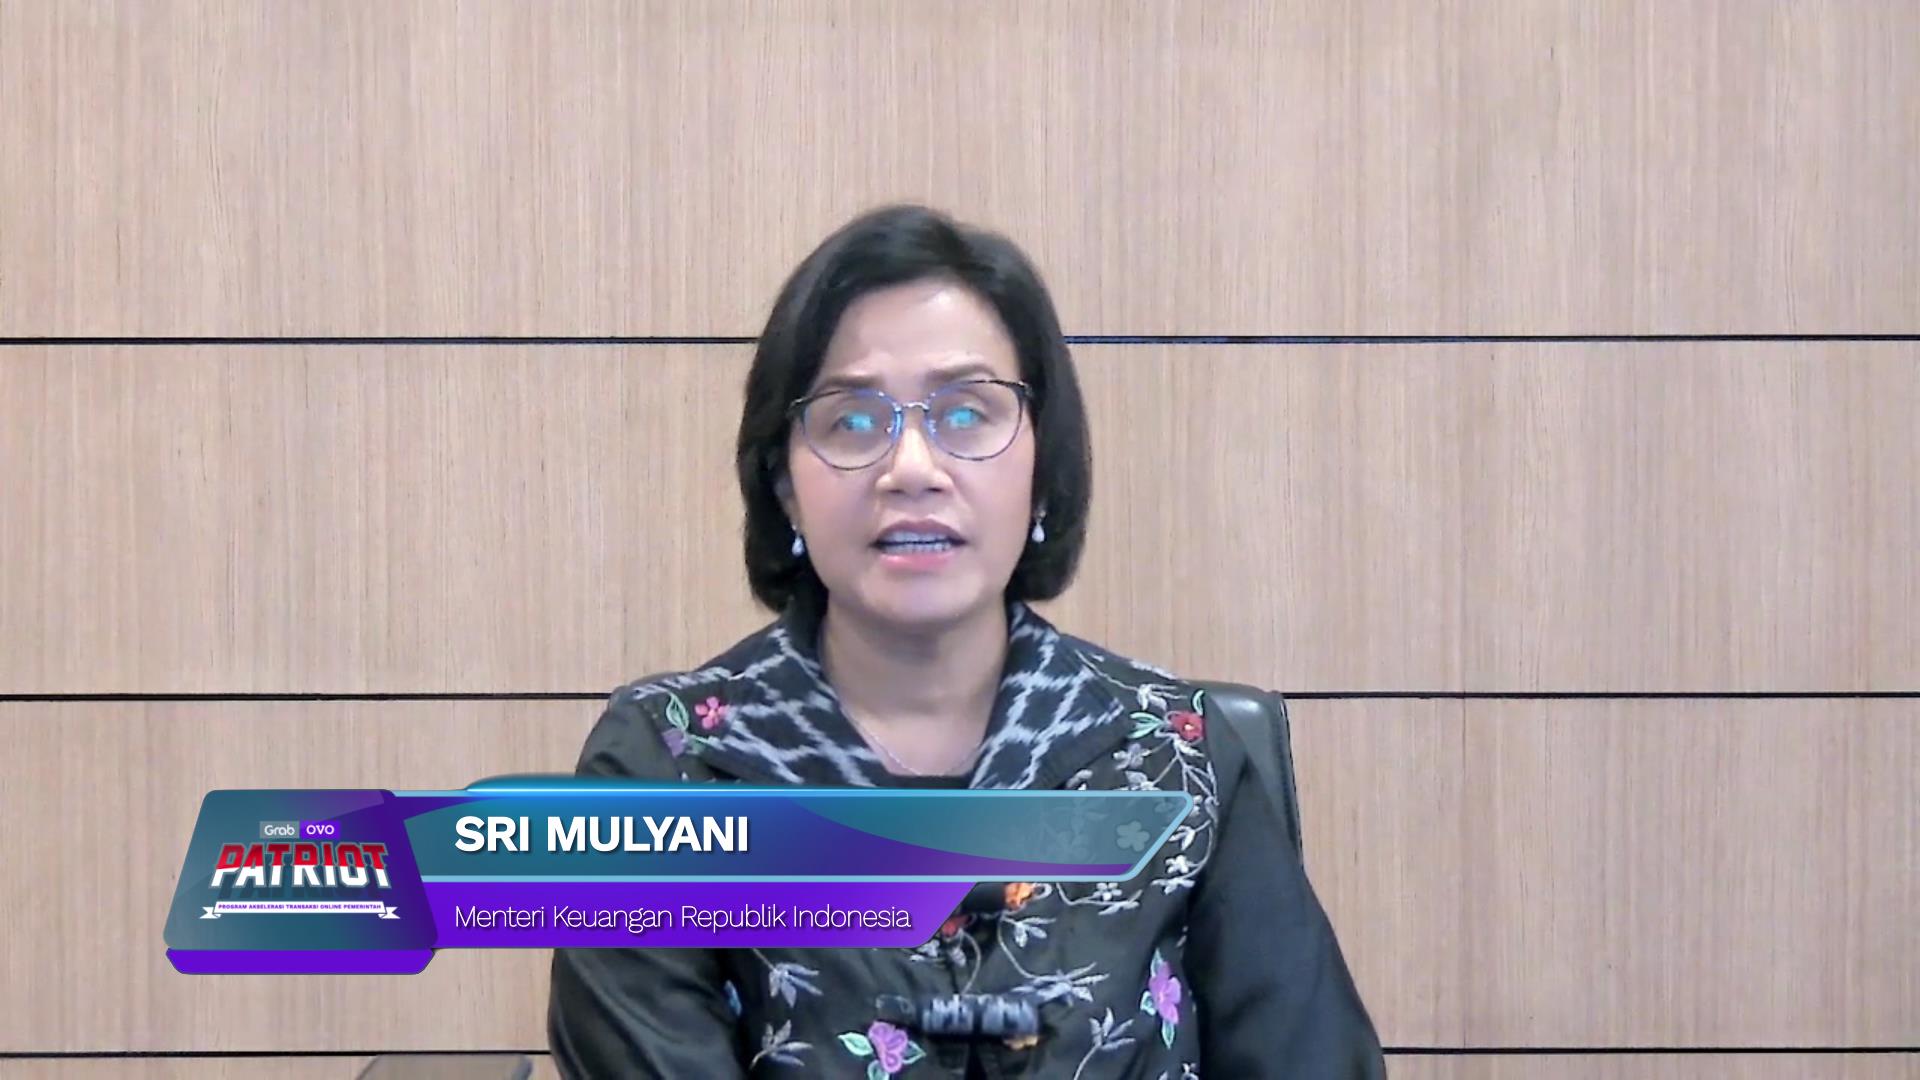 Menteri Keuangan RI, Ibu Sri Mulyani